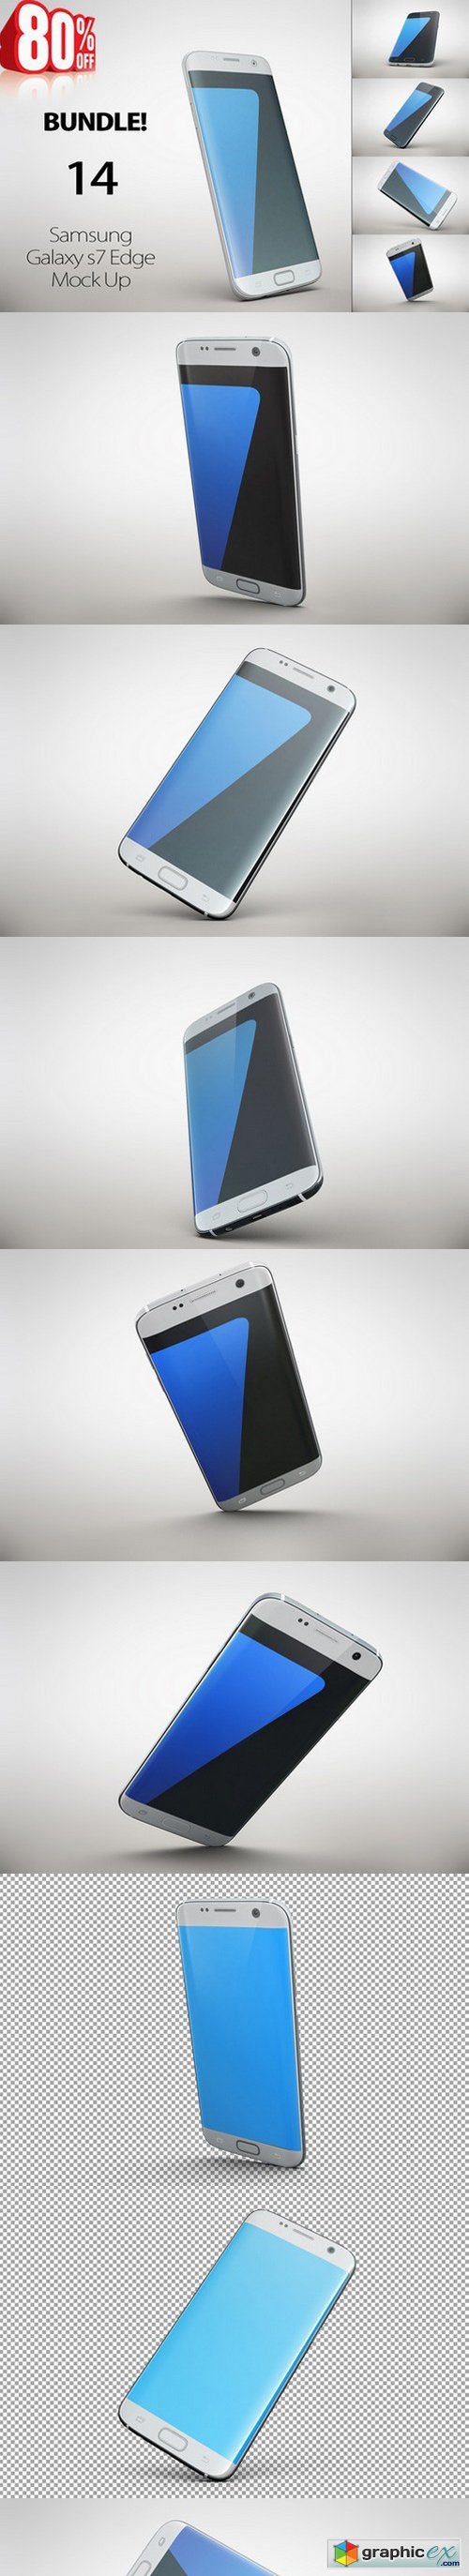 Bundle Samsung Galaxy s7Edge MockUp